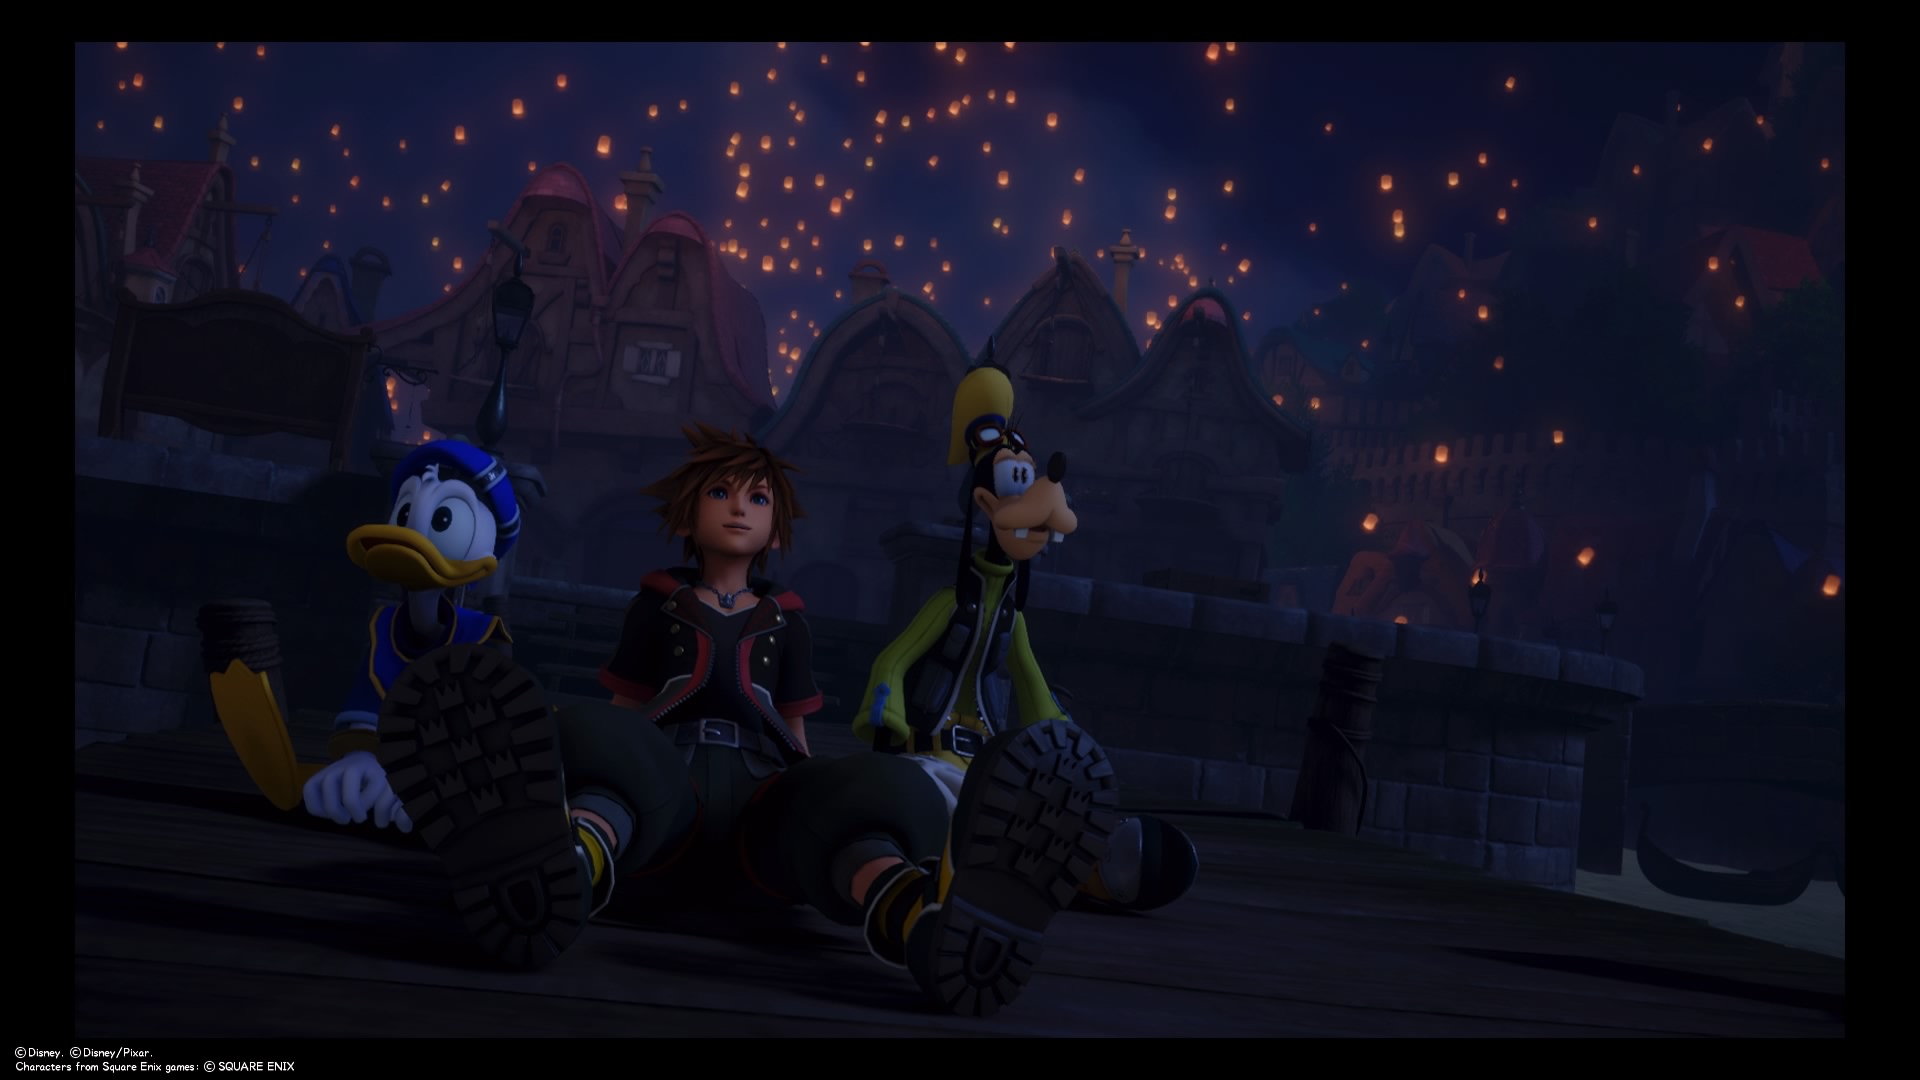 Kingdom Hearts 3 review